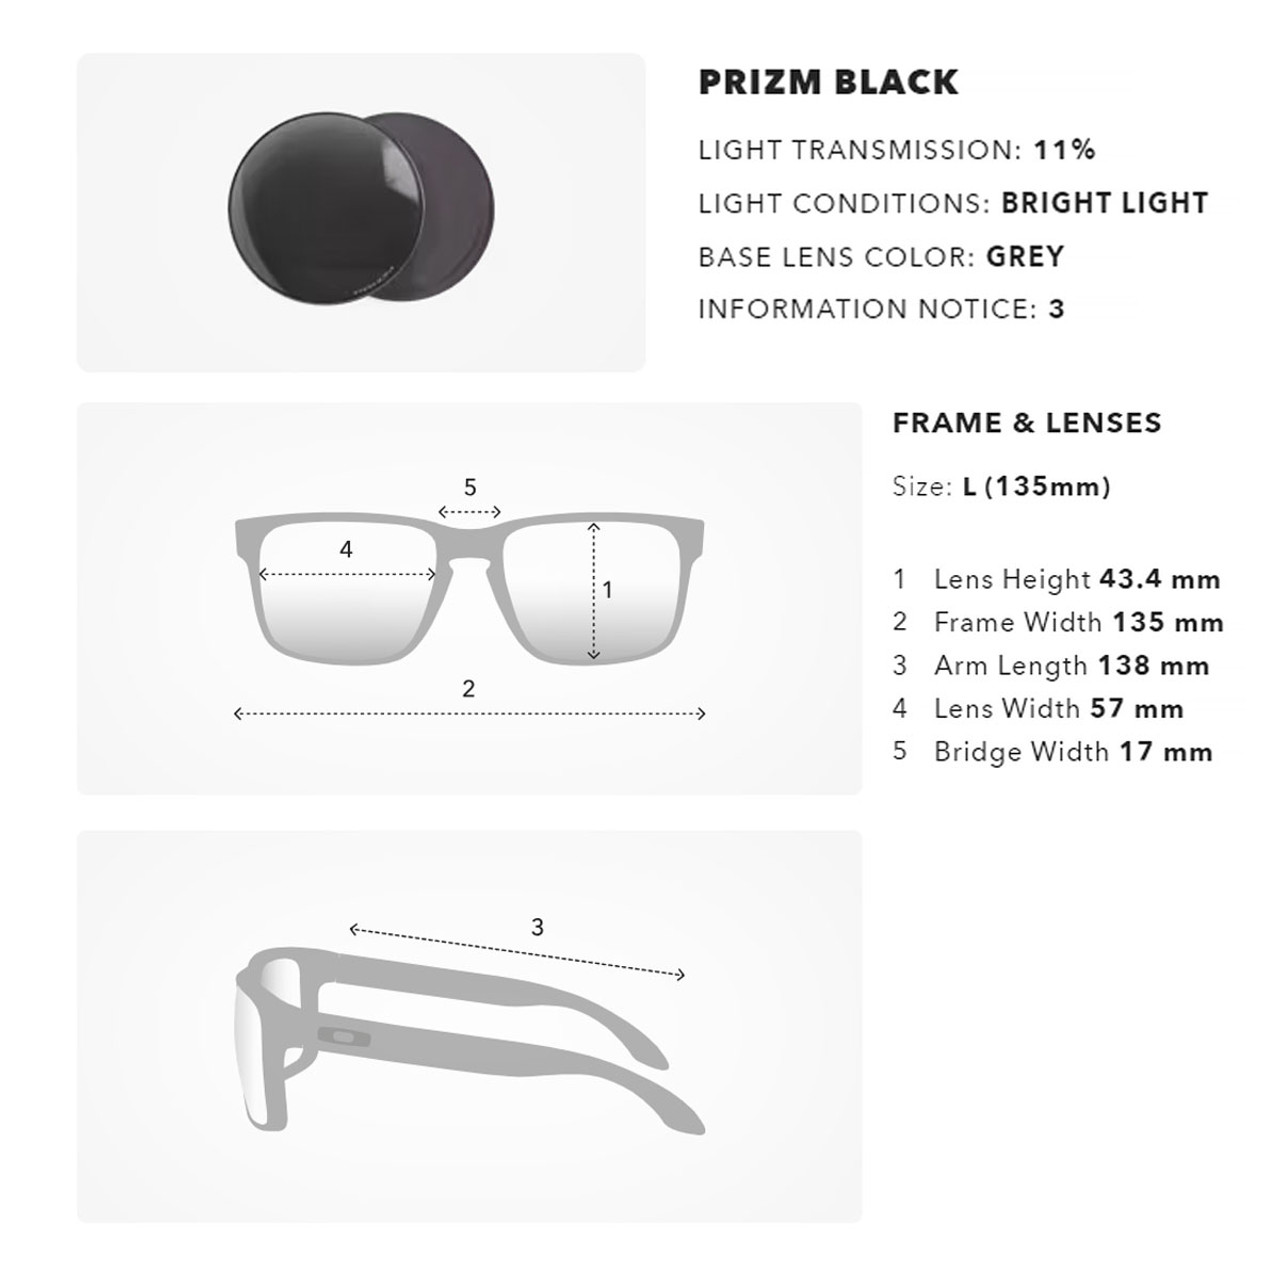 Oakley Men's Holbrook™ Mix Sunglasses